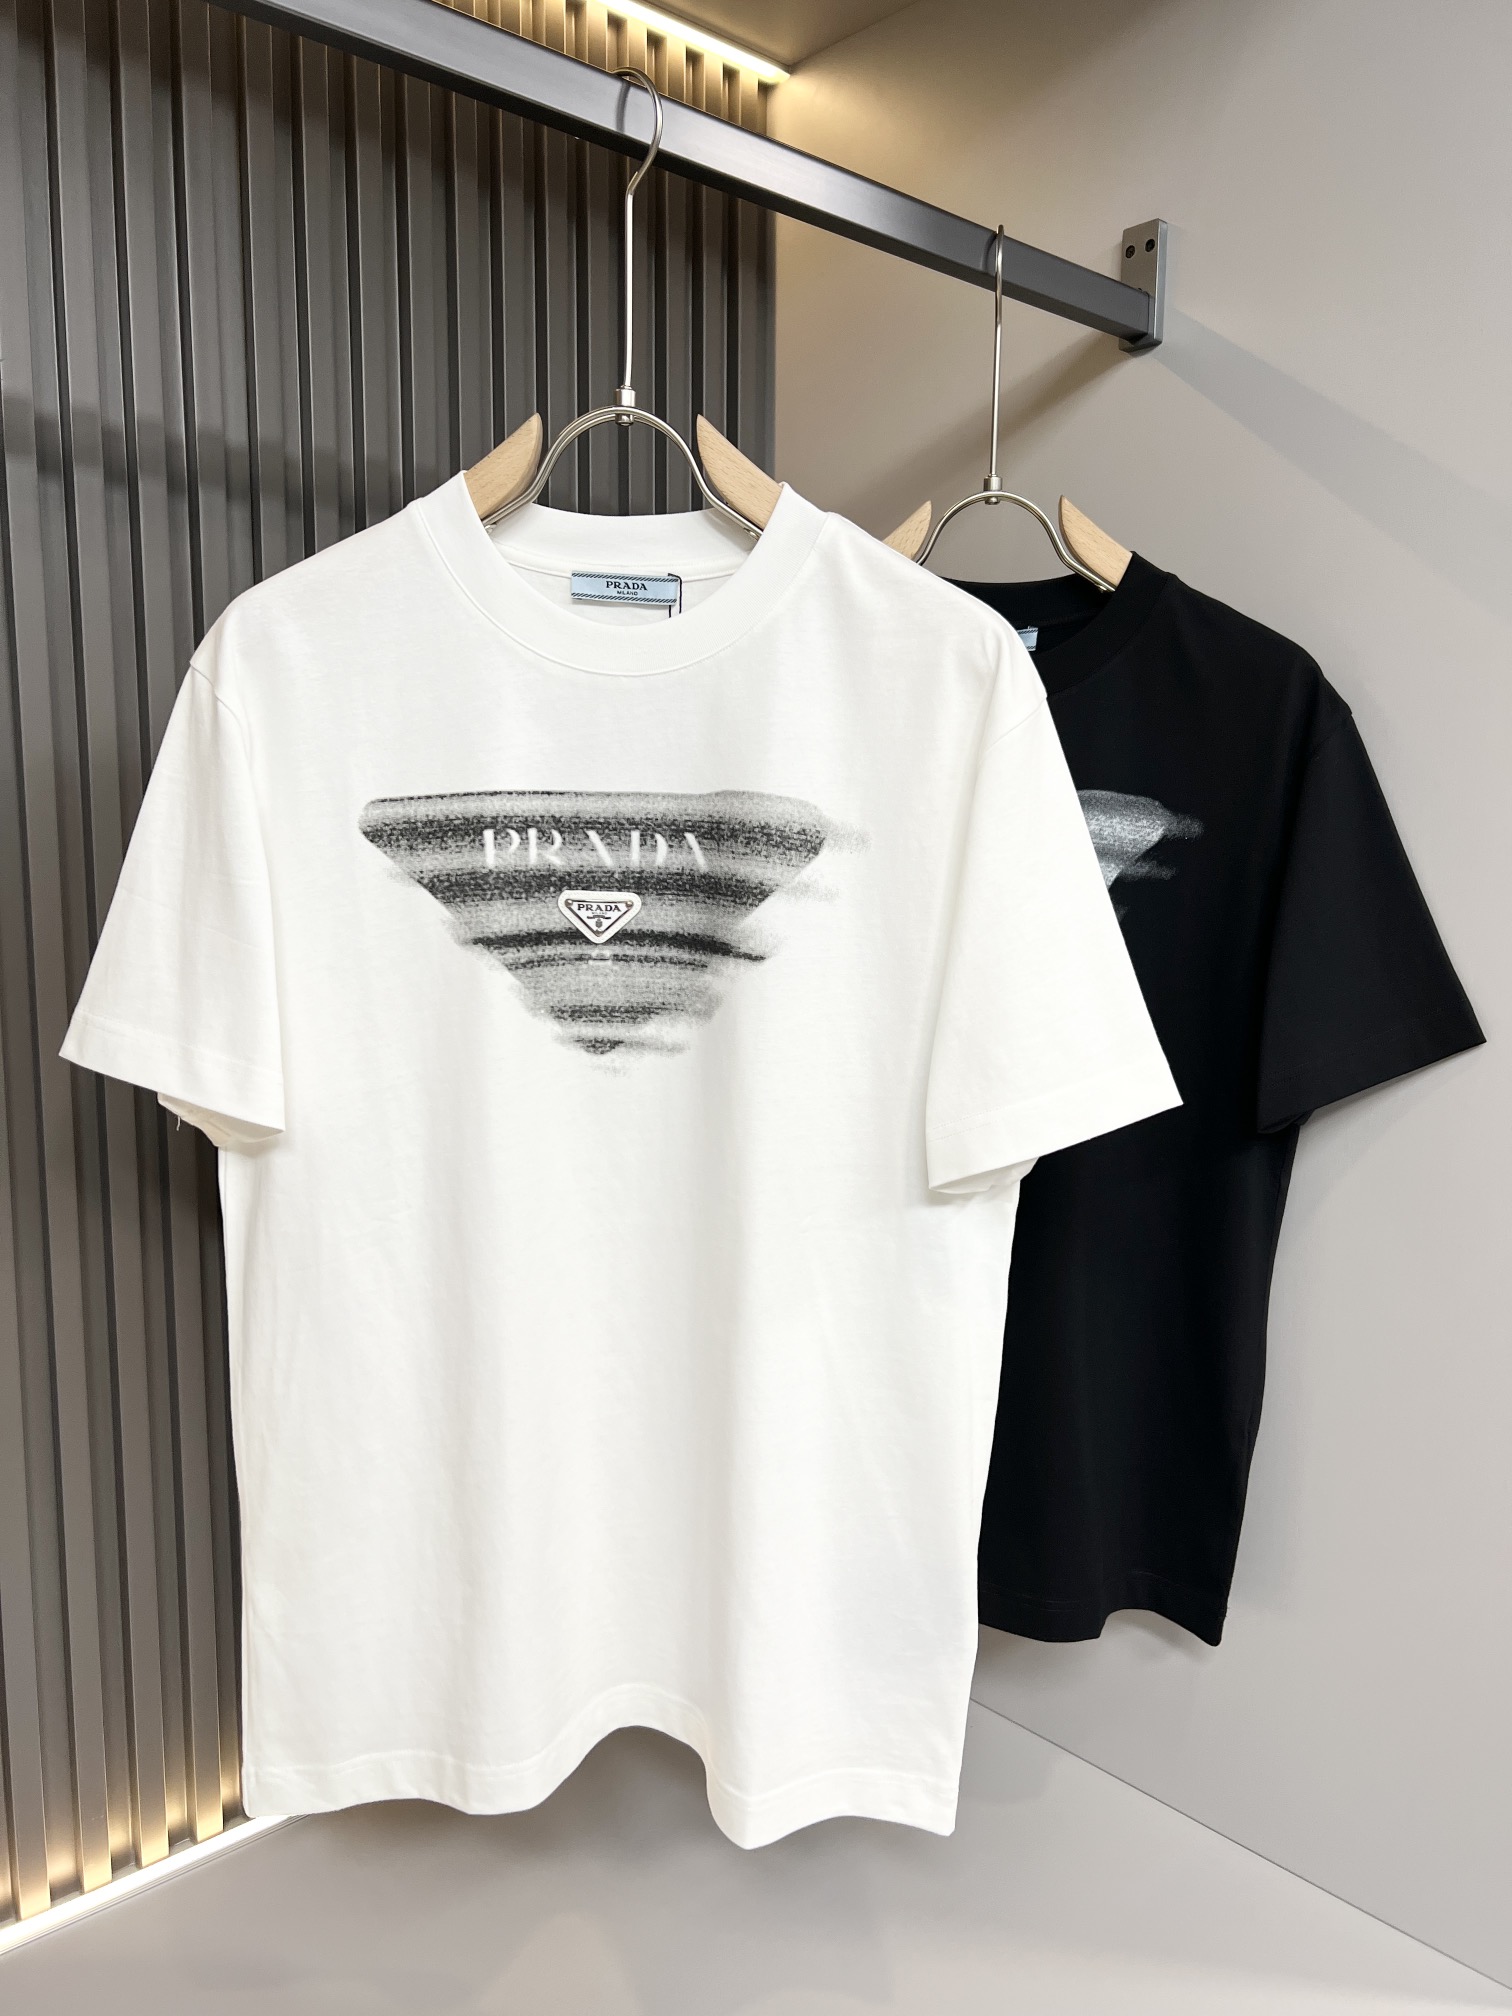 Prada Clothing T-Shirt Printing Unisex Cotton Spring/Summer Collection Fashion Short Sleeve